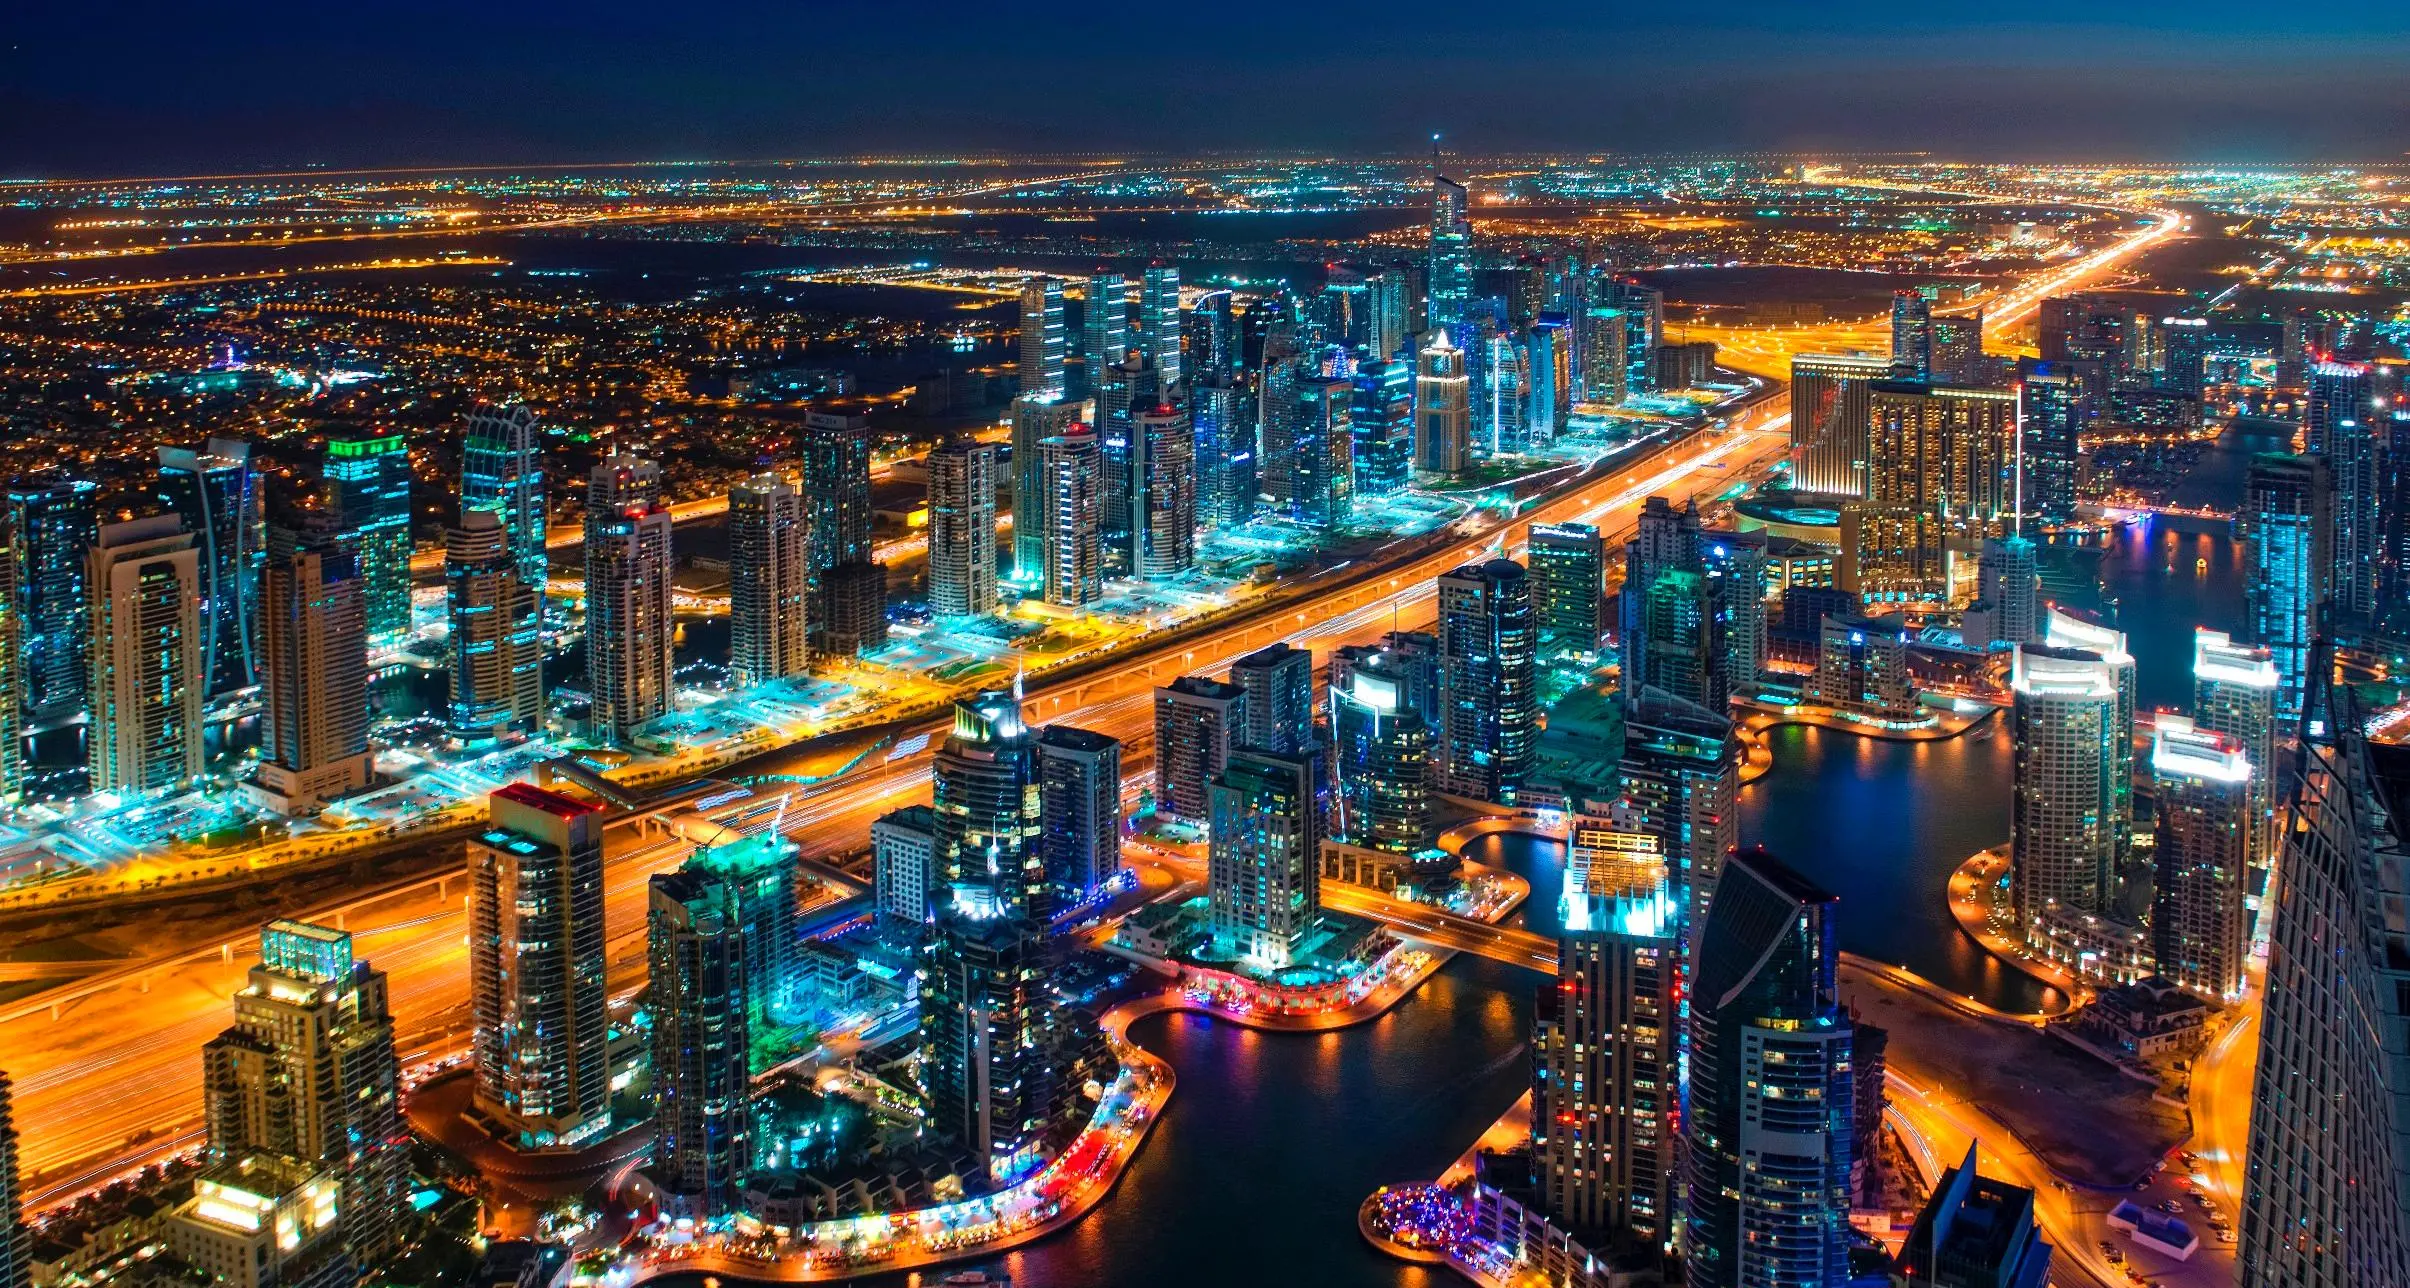 Dubai Economy issues 15,475 new licences in Q1 2021